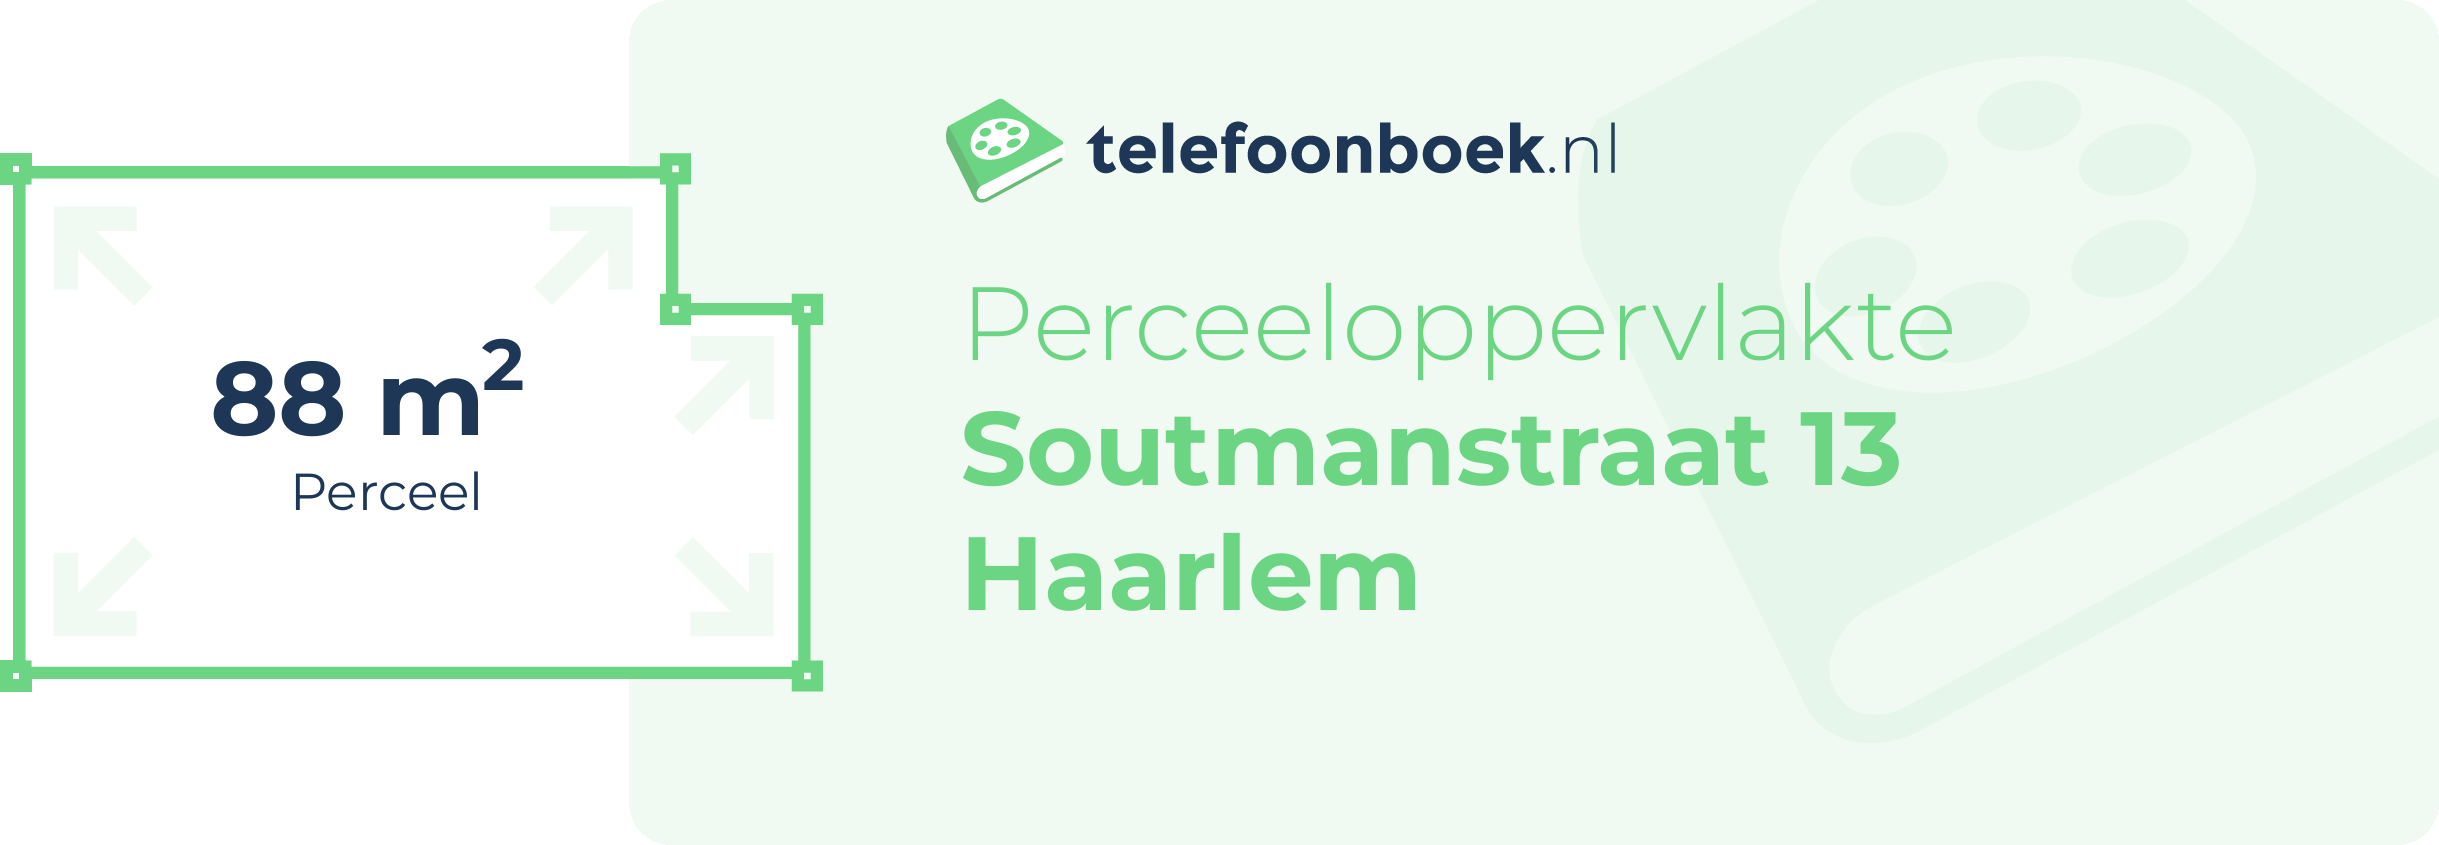 Perceeloppervlakte Soutmanstraat 13 Haarlem